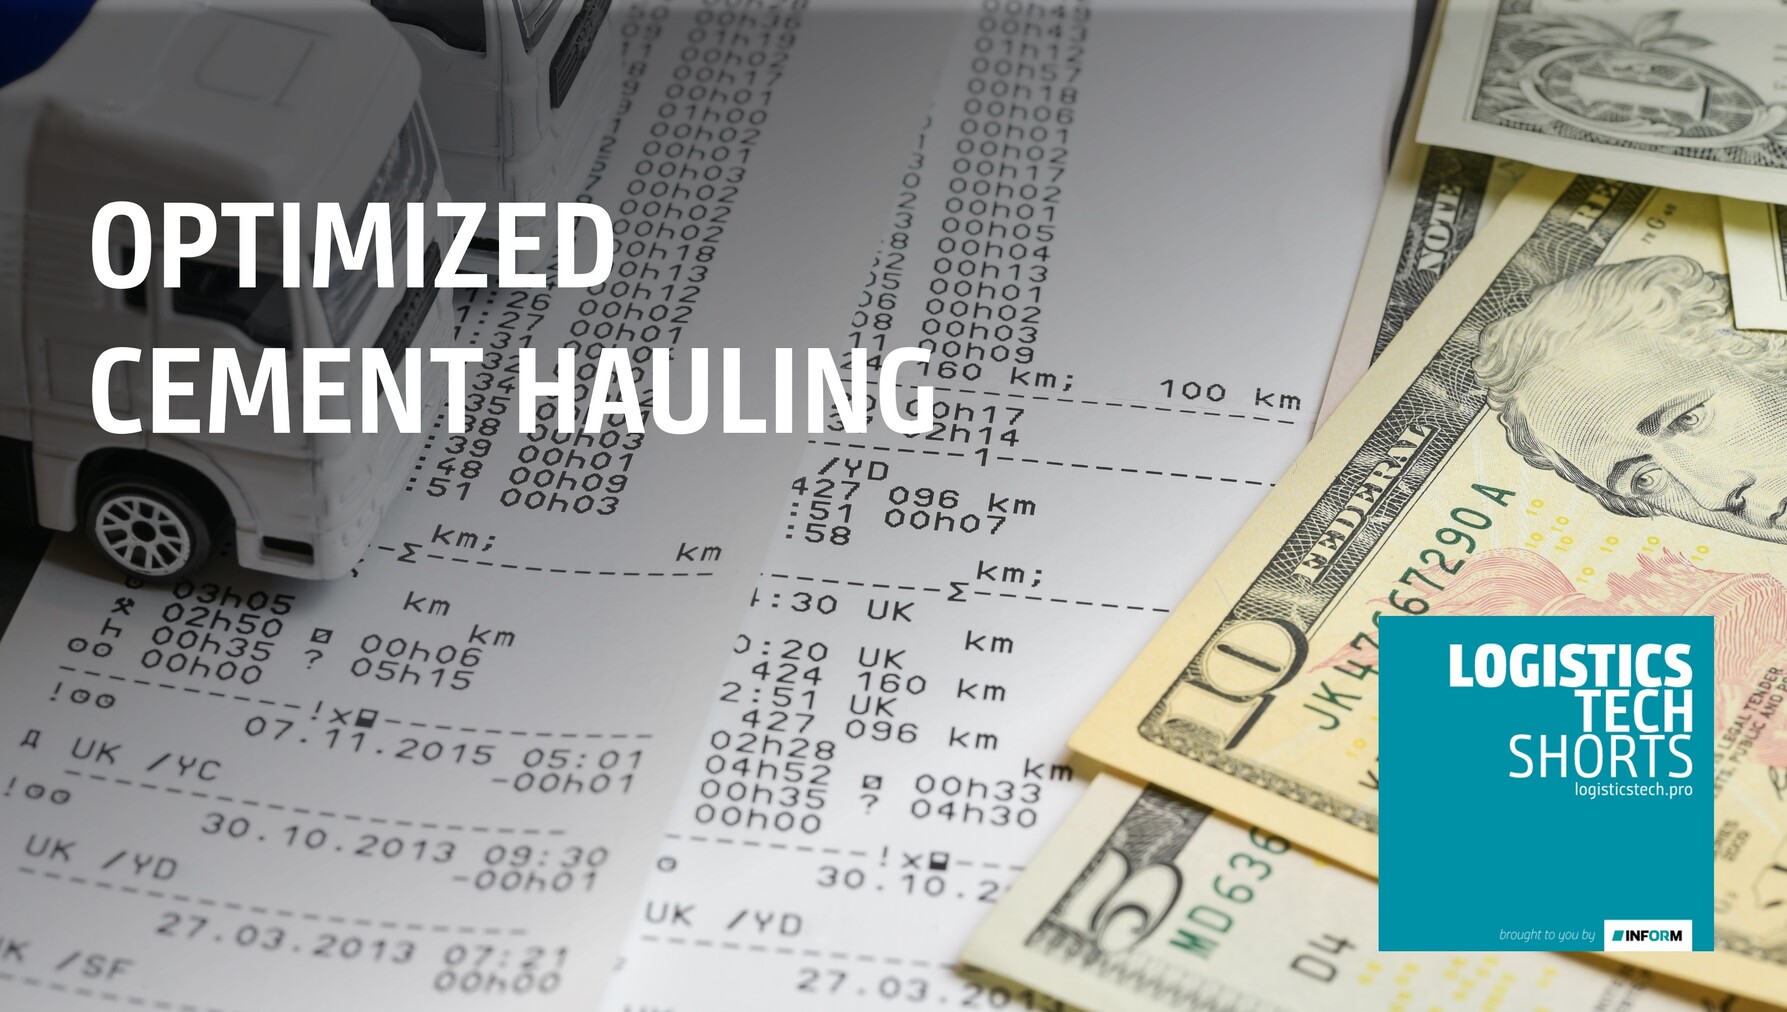 Optimized Cement Hauling - Promo